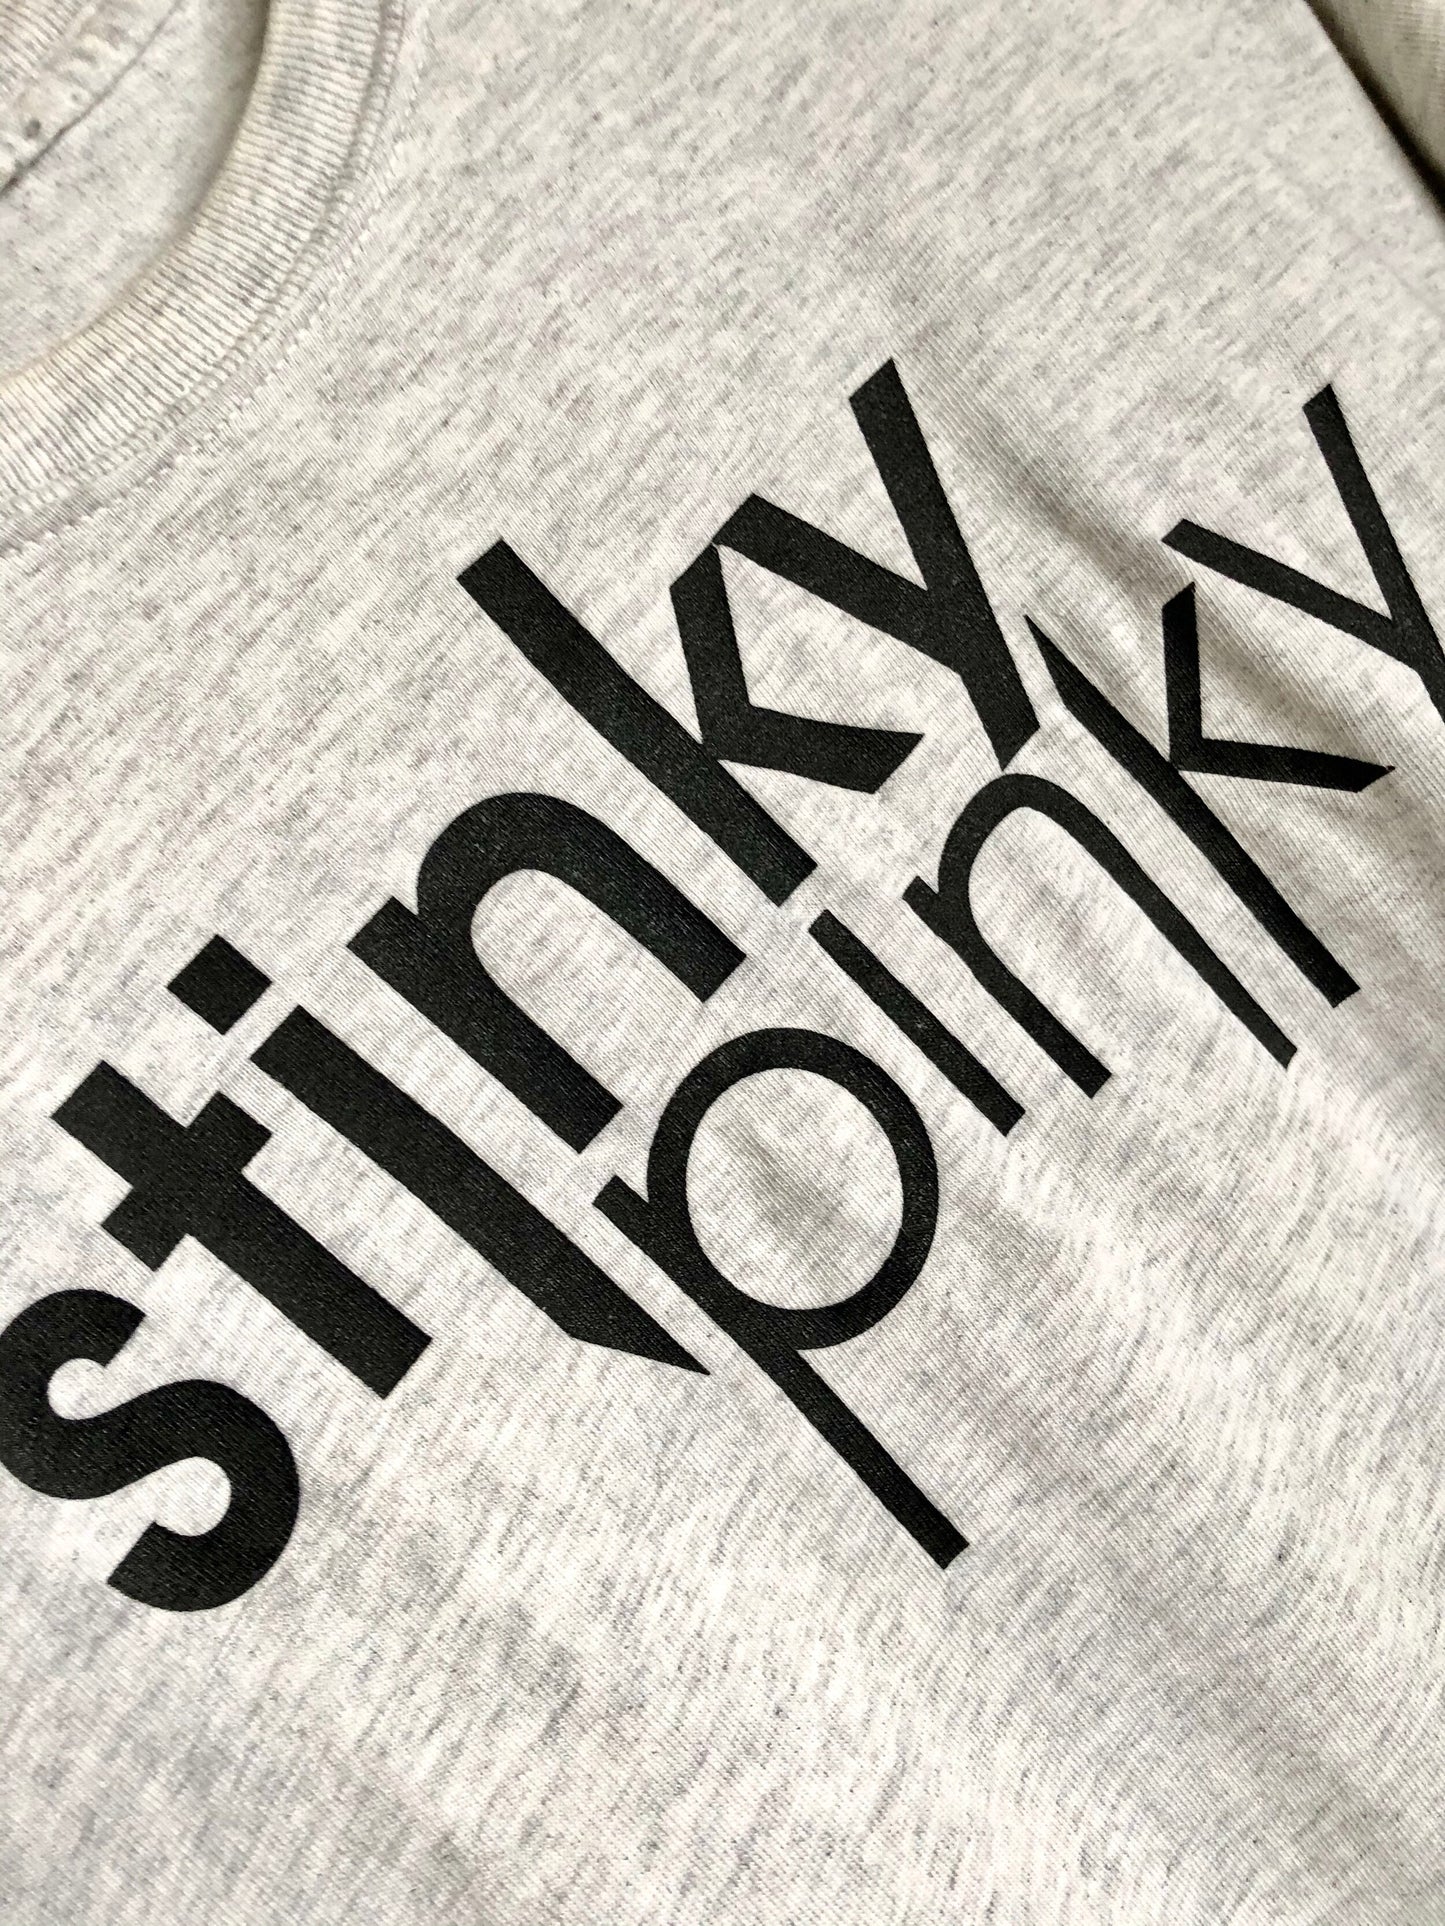 Vintage Stinky Pinky T-Shirt